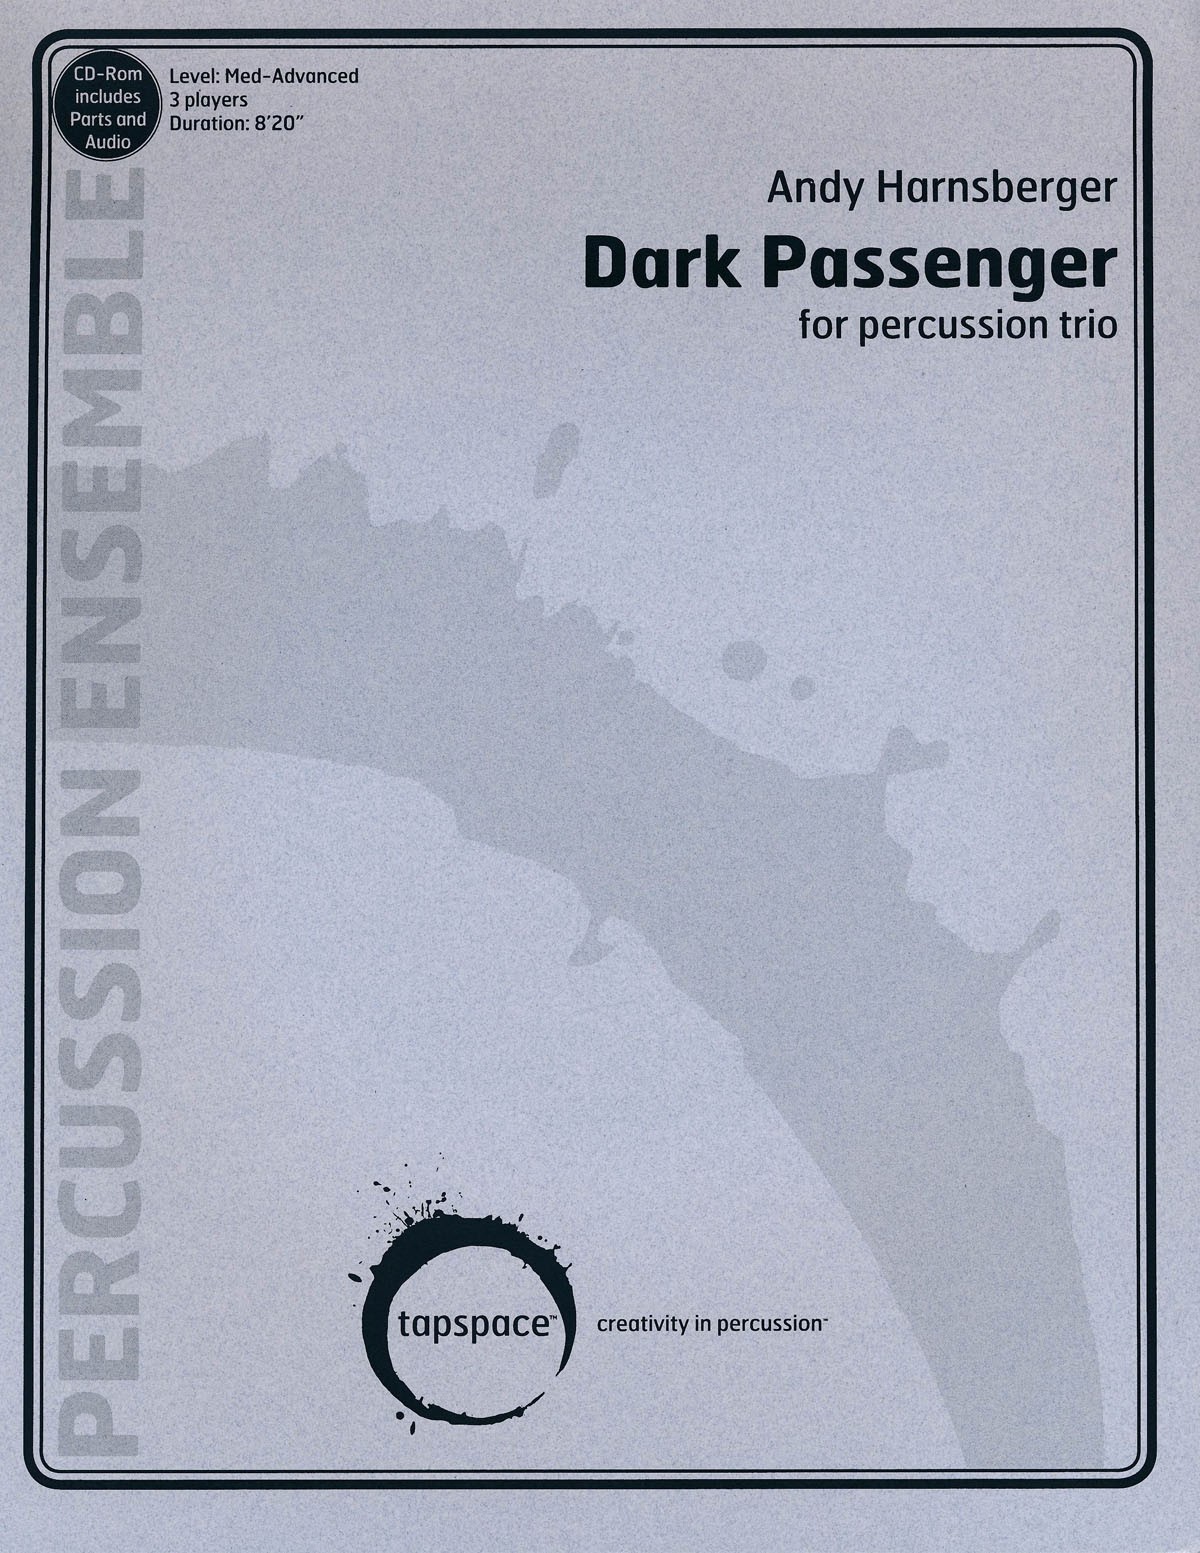 Dark Passenger by Andy Harnsberger